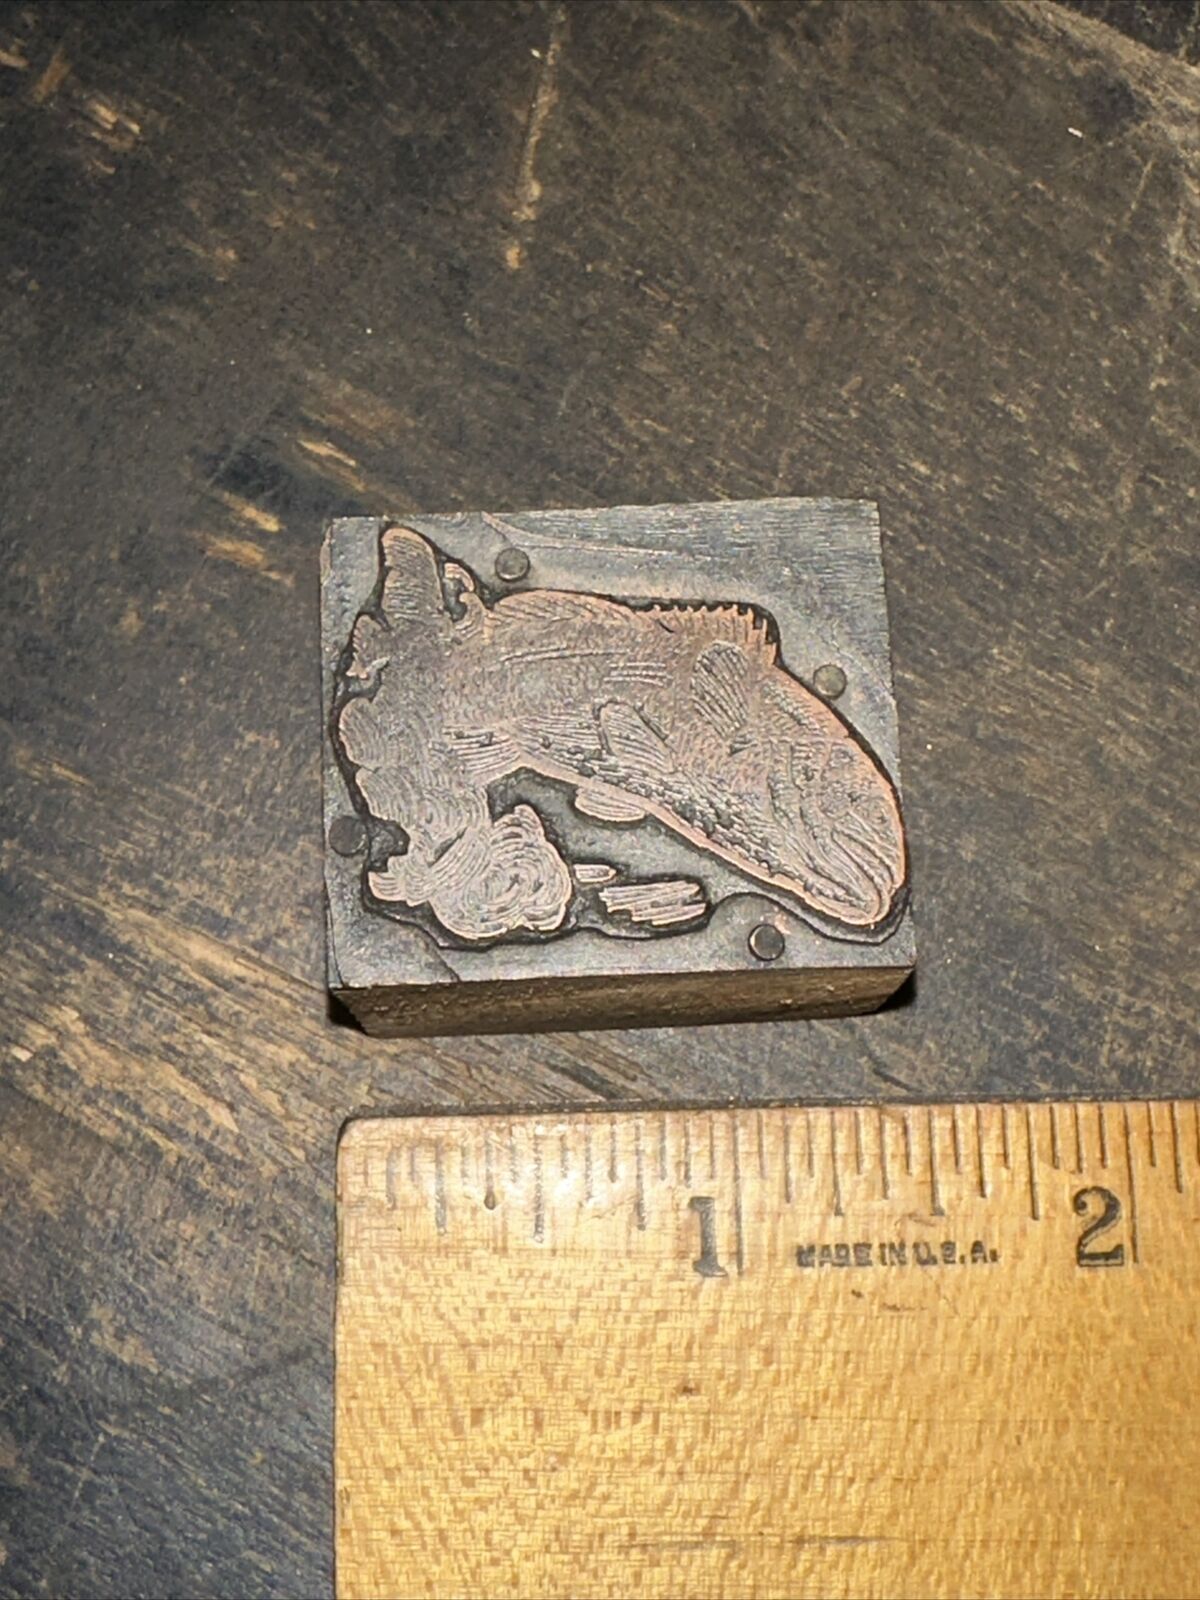 (Print Block) “ Fish/Bass “ Early Copper on Wood Print Block